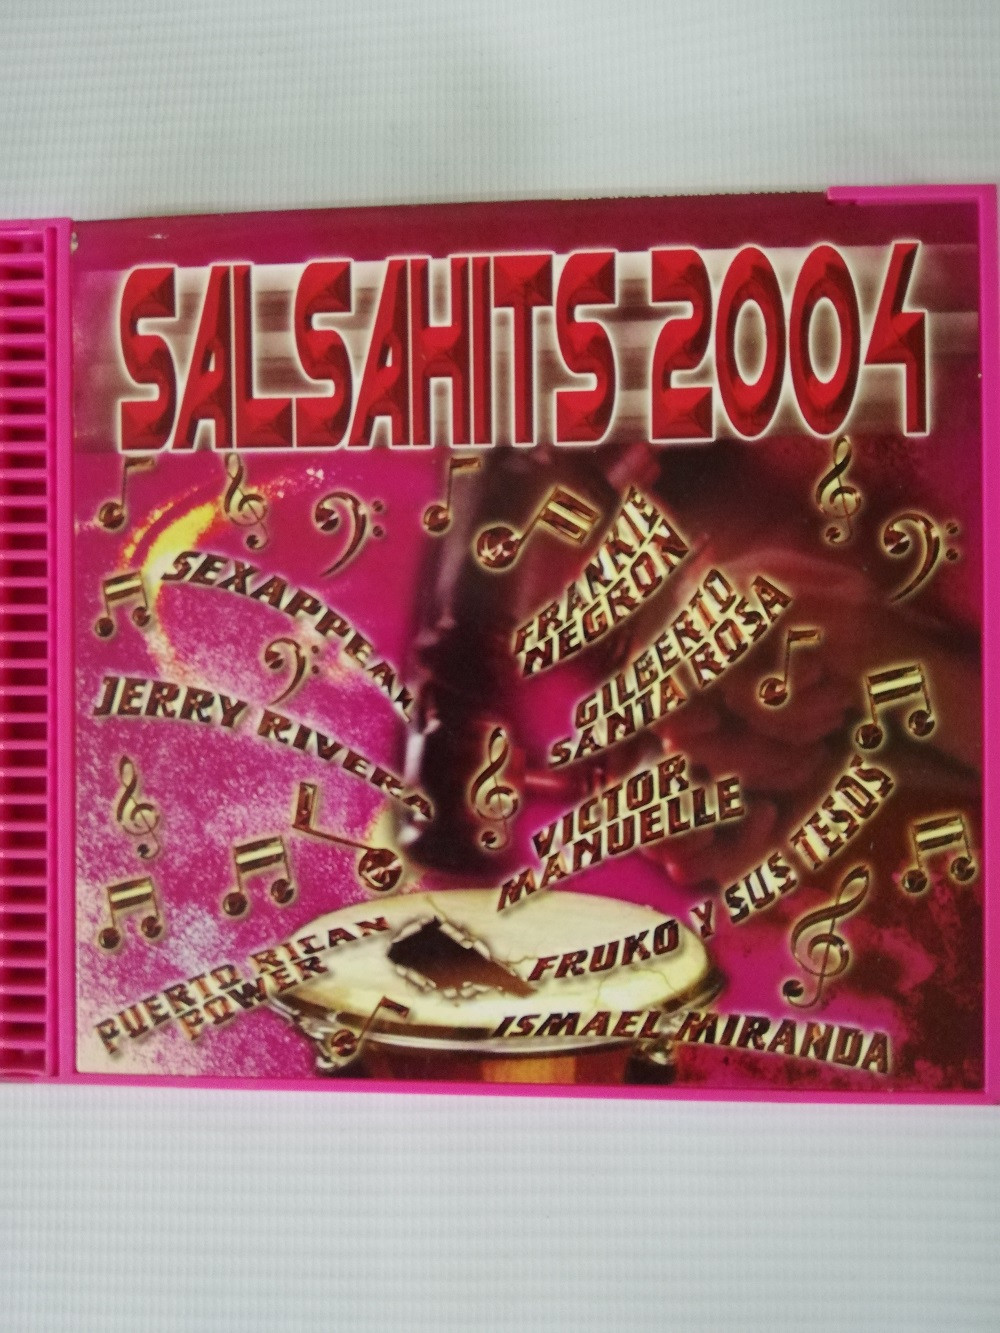 Imagen CD SALSA HITS - SALSA HITS 2004